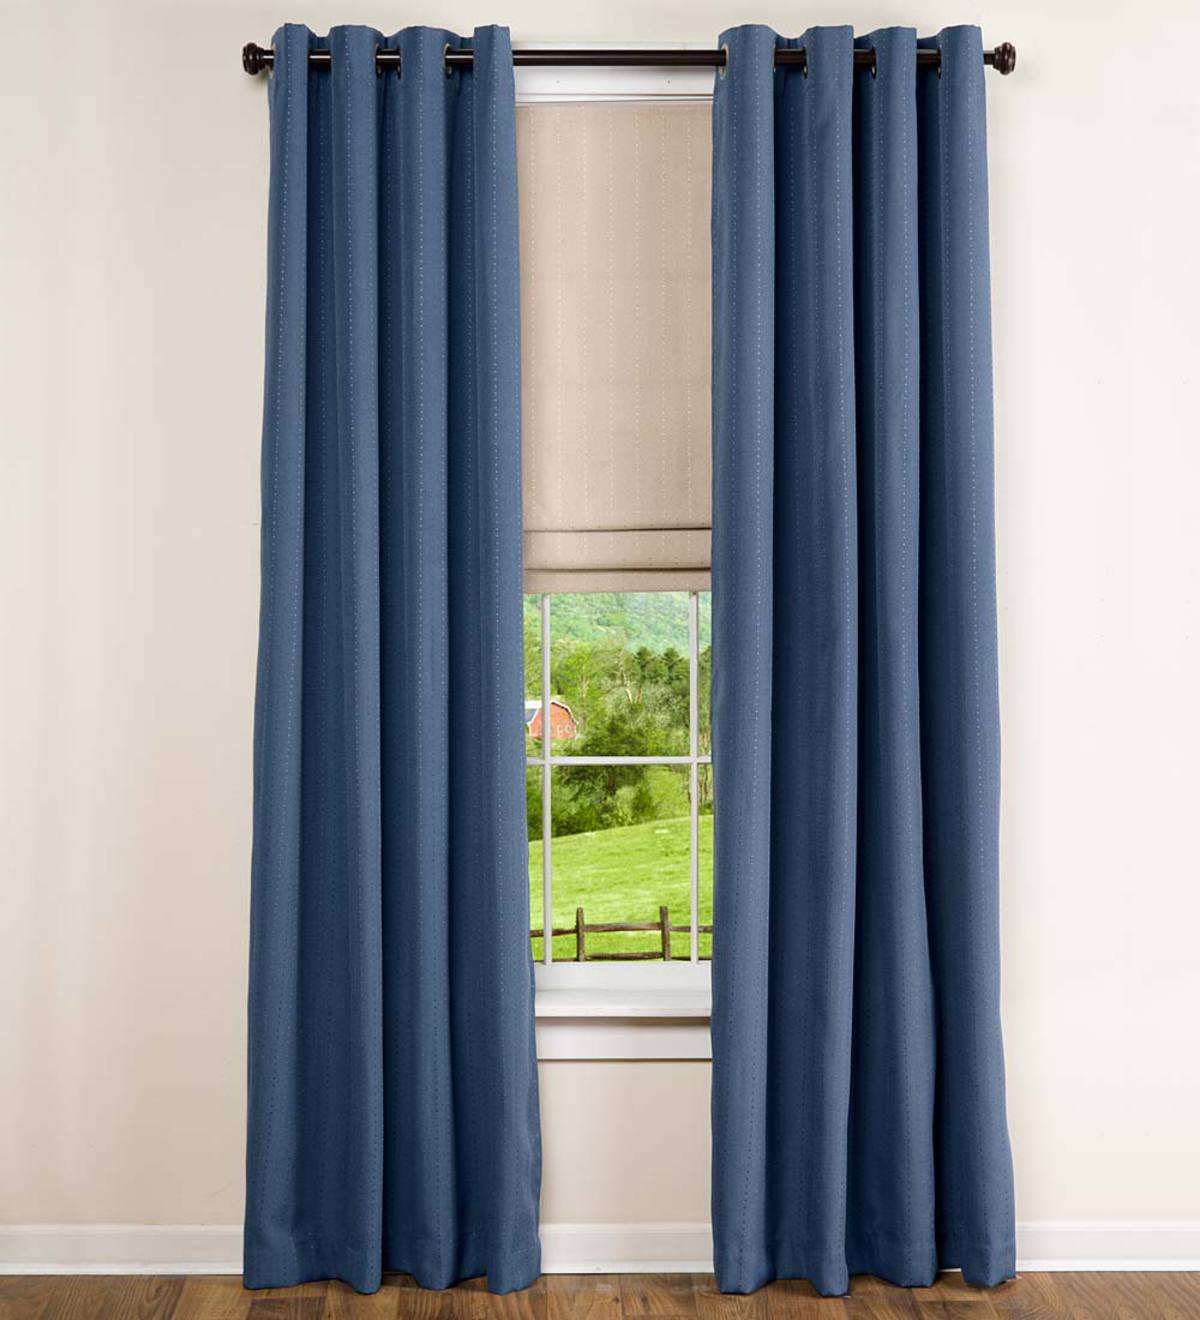 Room Darkening Curtain with Grommets, Diamond Dot, 63”L x 54”W